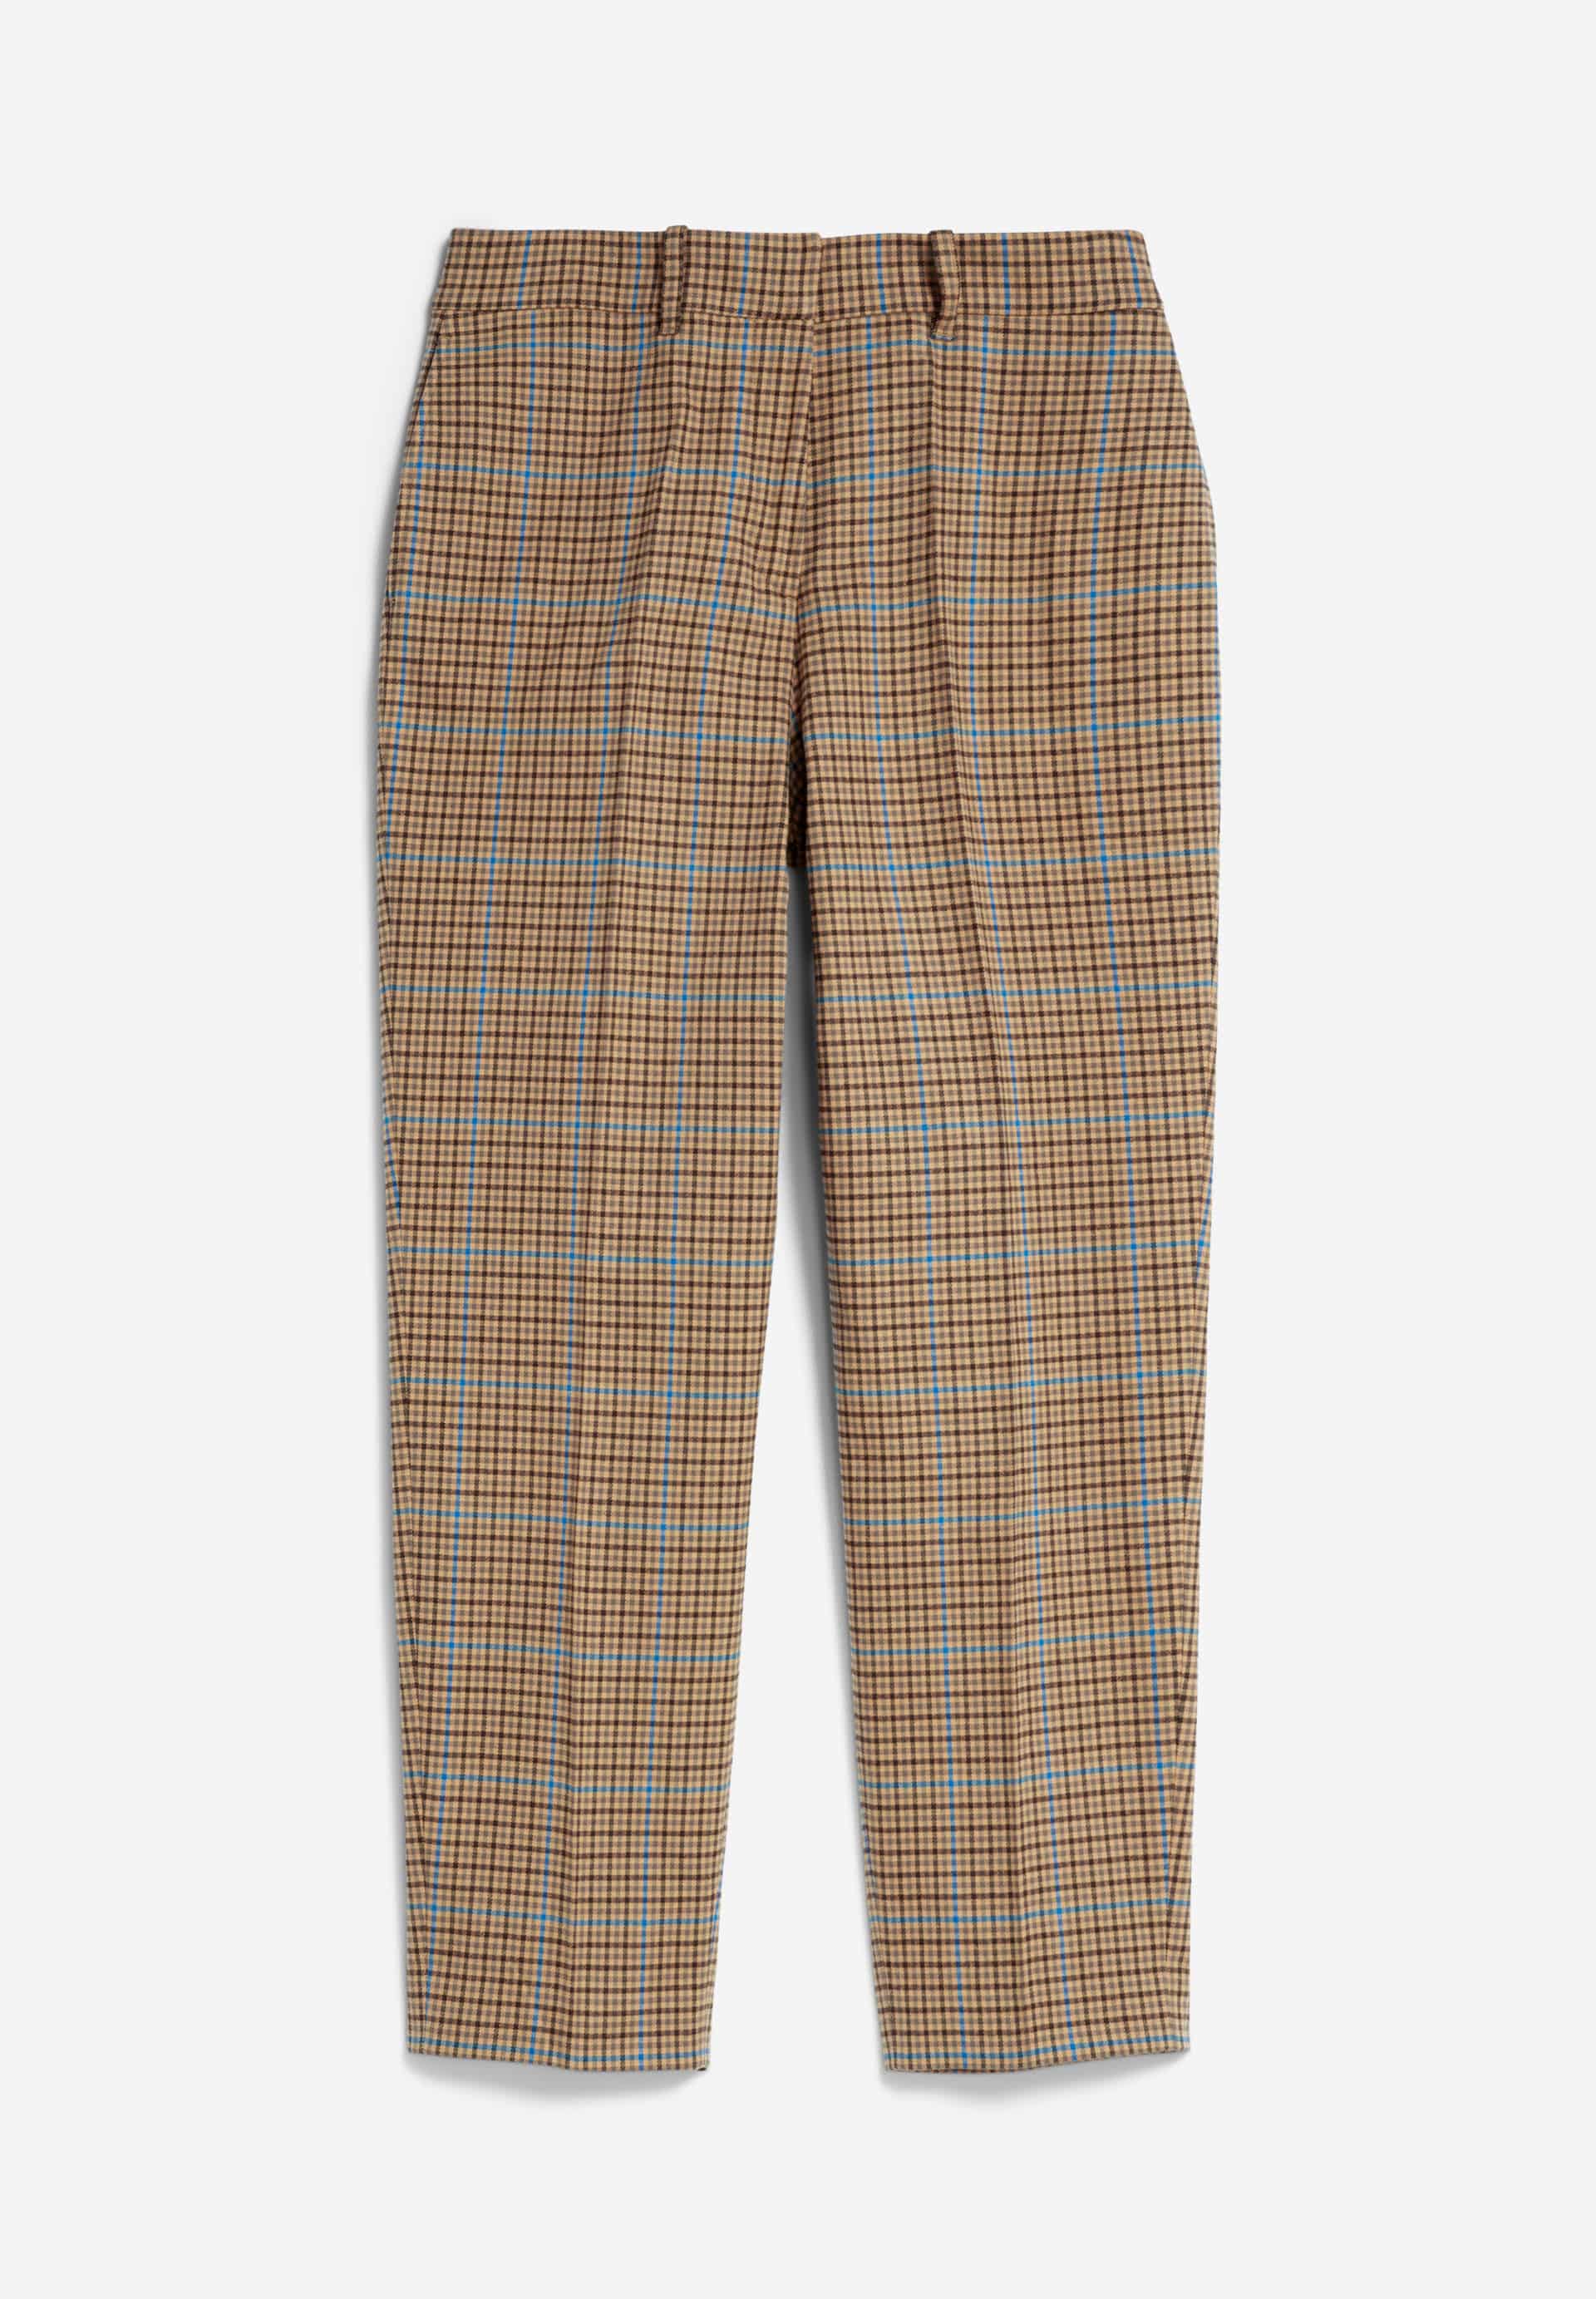 WARMAAR PATTERN Woven Pants made of Organic Cotton Mix